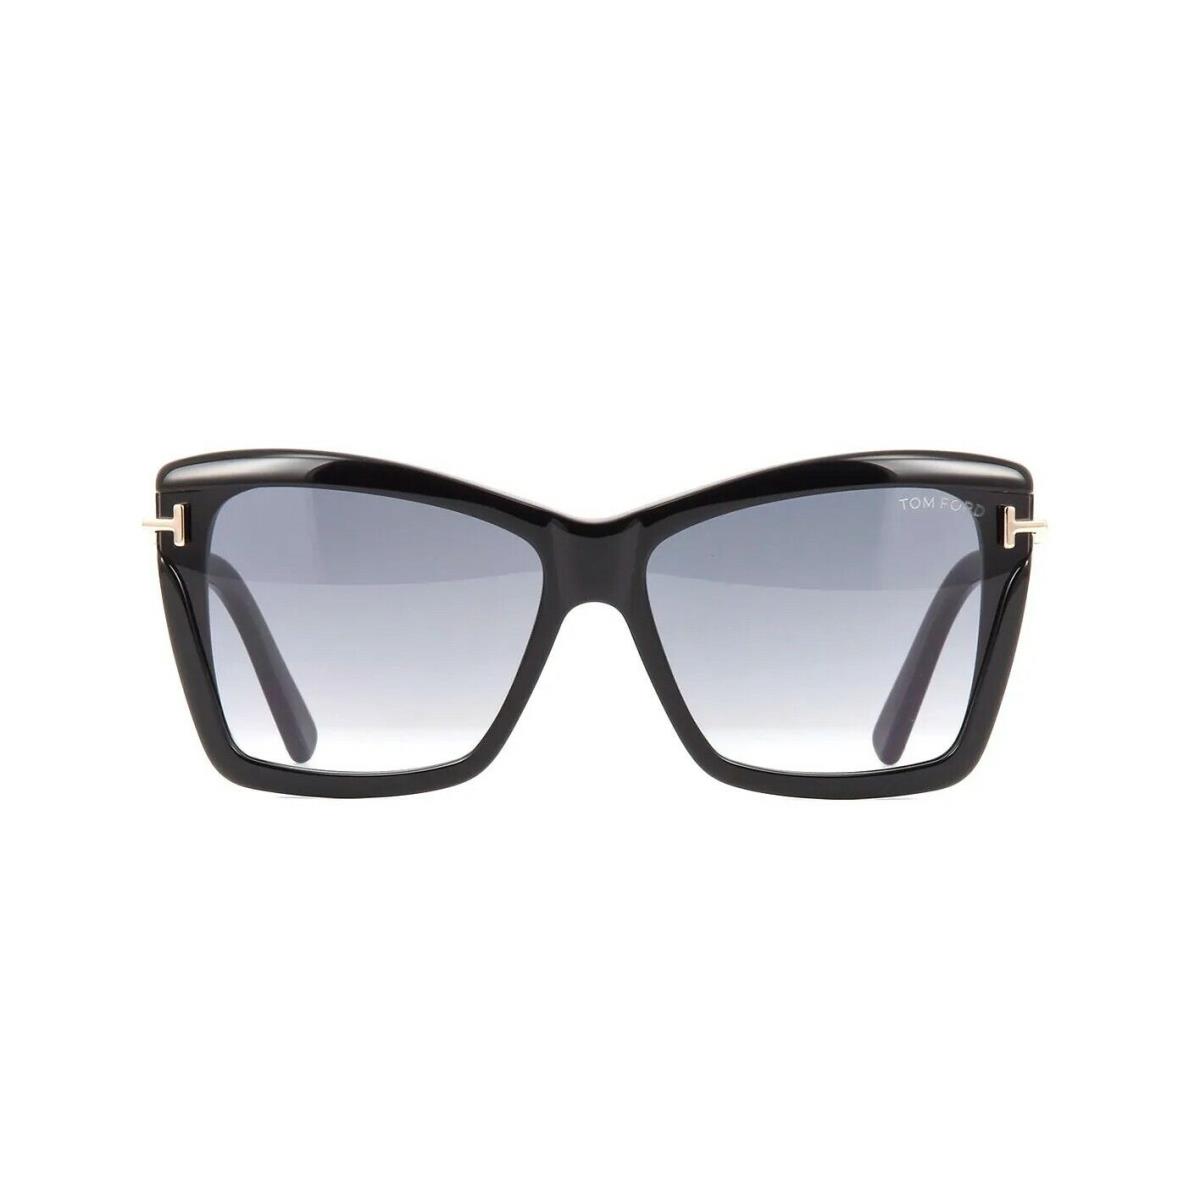 Tom Ford Leah FT 0849 Shiny Black/grey Shaded 01B Sunglasses - Frame: Shiny Black, Lens: Grey Shaded